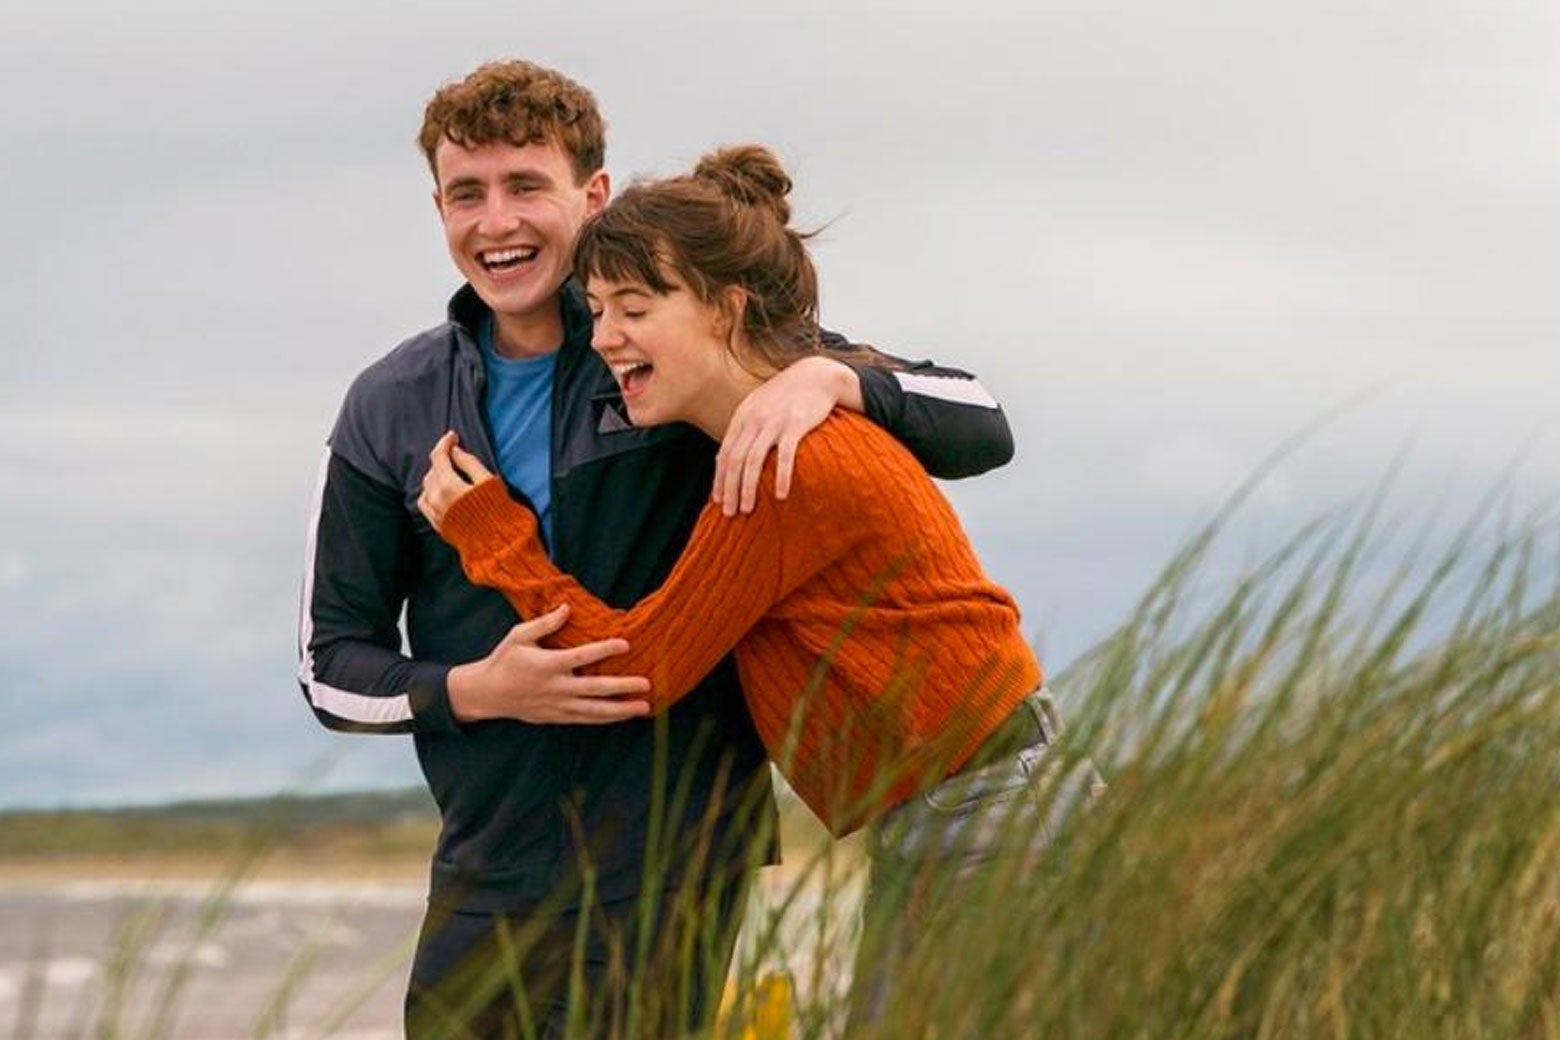 Paul Mescal and Daisy Edgar-Jones walk along a windy beach while embracing.